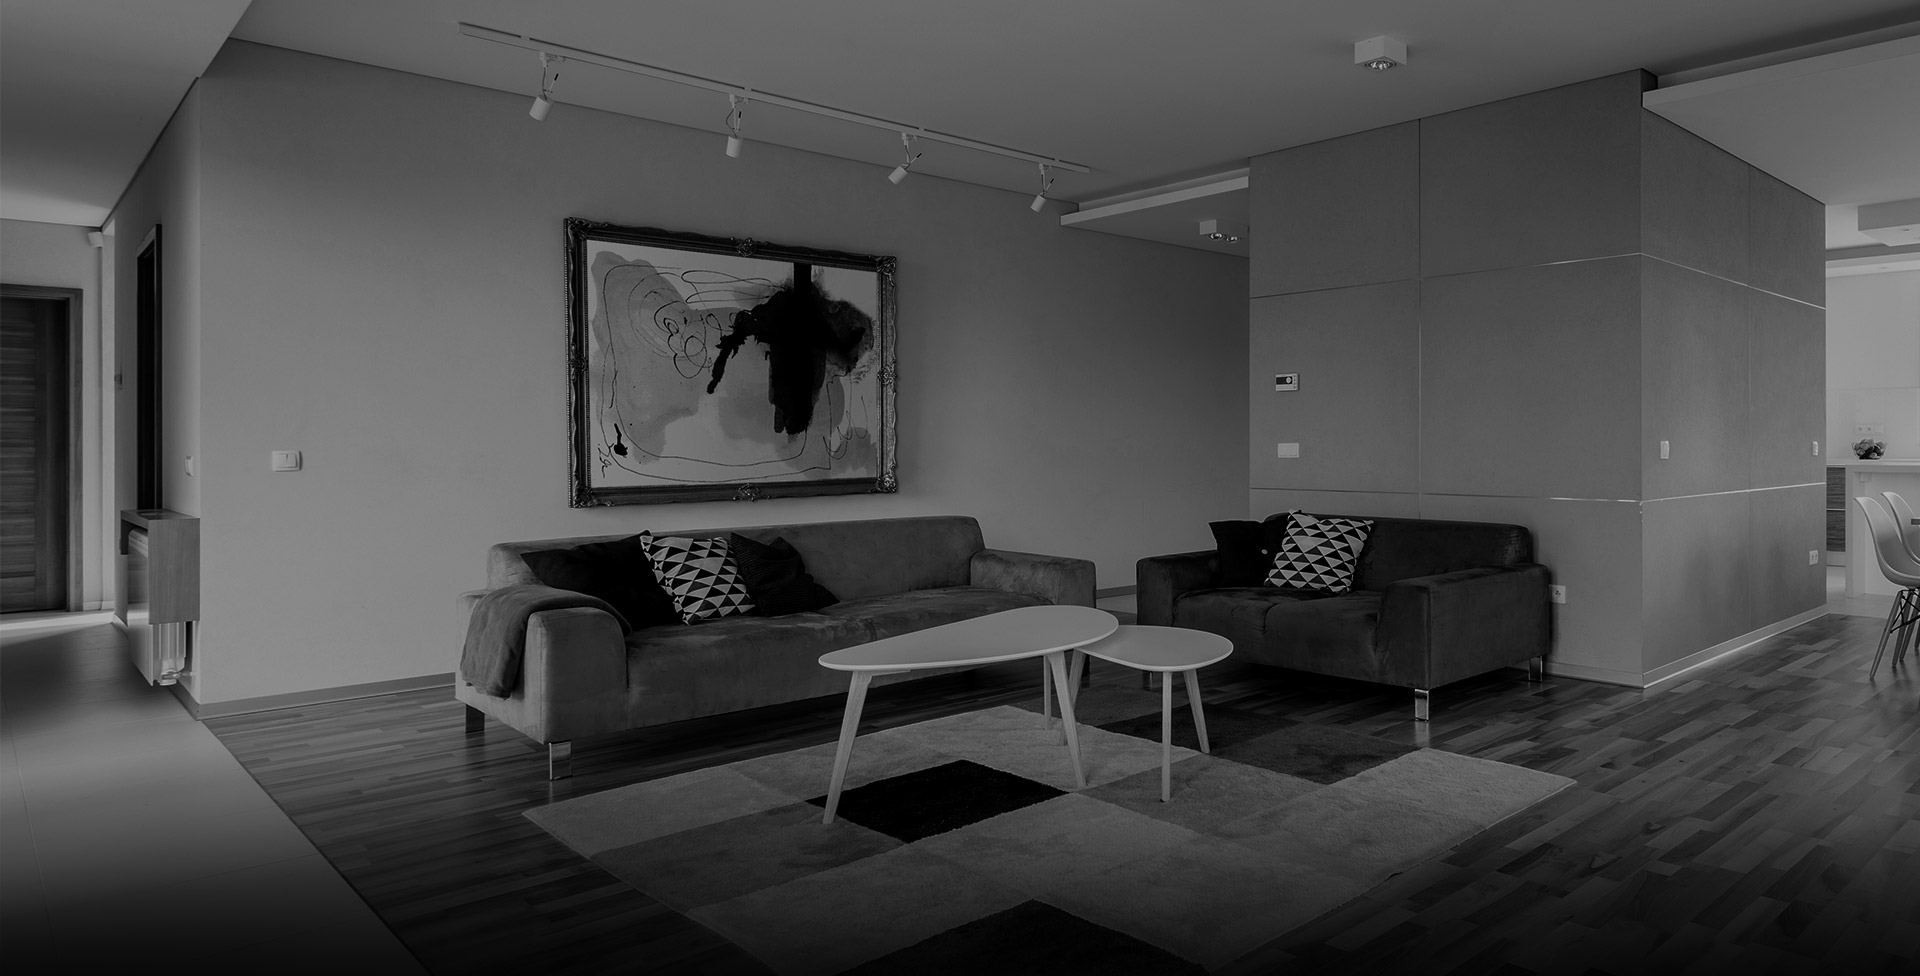 Cámara inteligente para interiores - AHIMPFI4U1